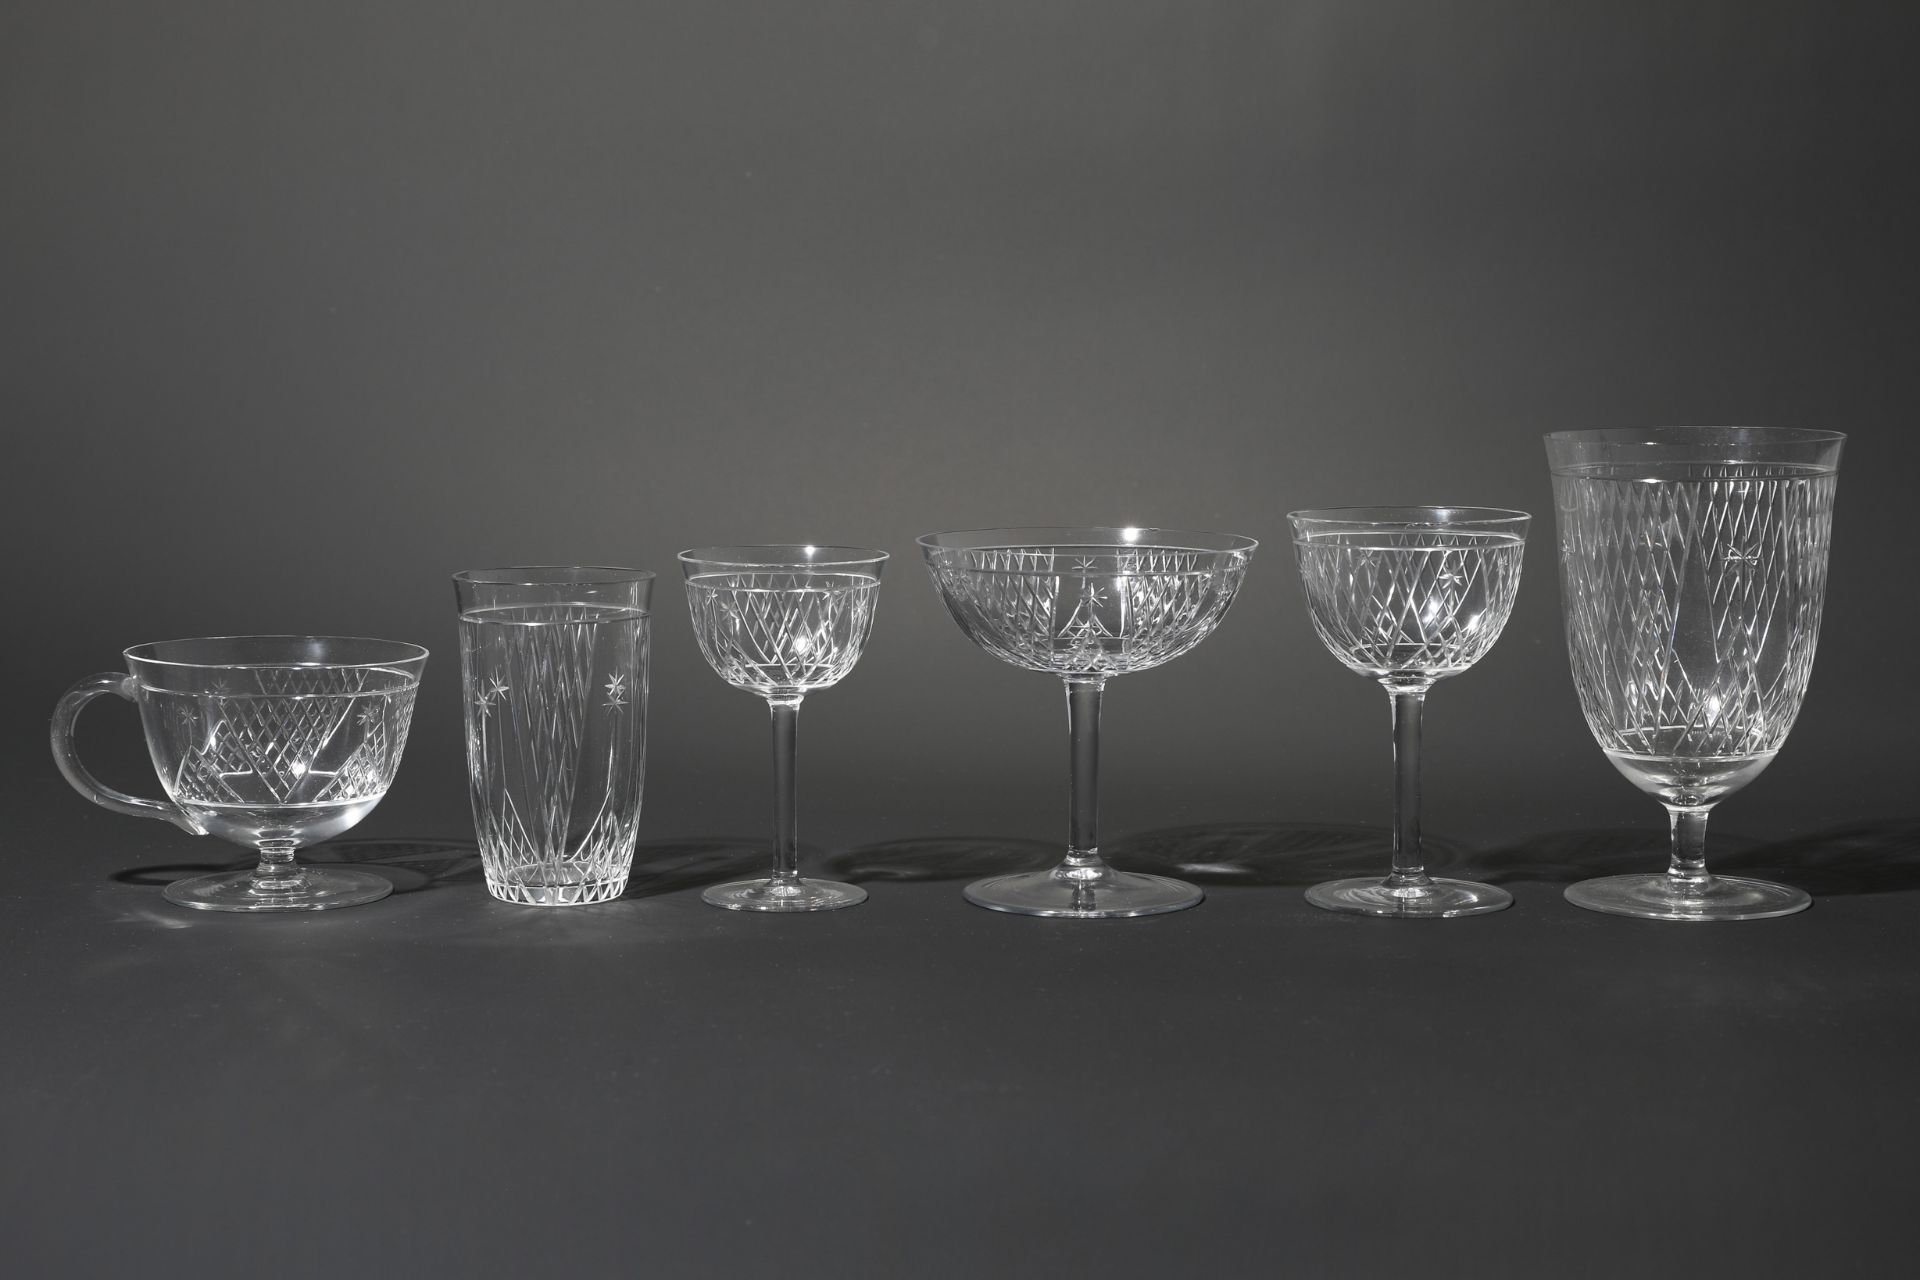 Josef Hoffmann, Wiener Werkstätte, glass service, model 200-DEKOR 1 - Image 11 of 11